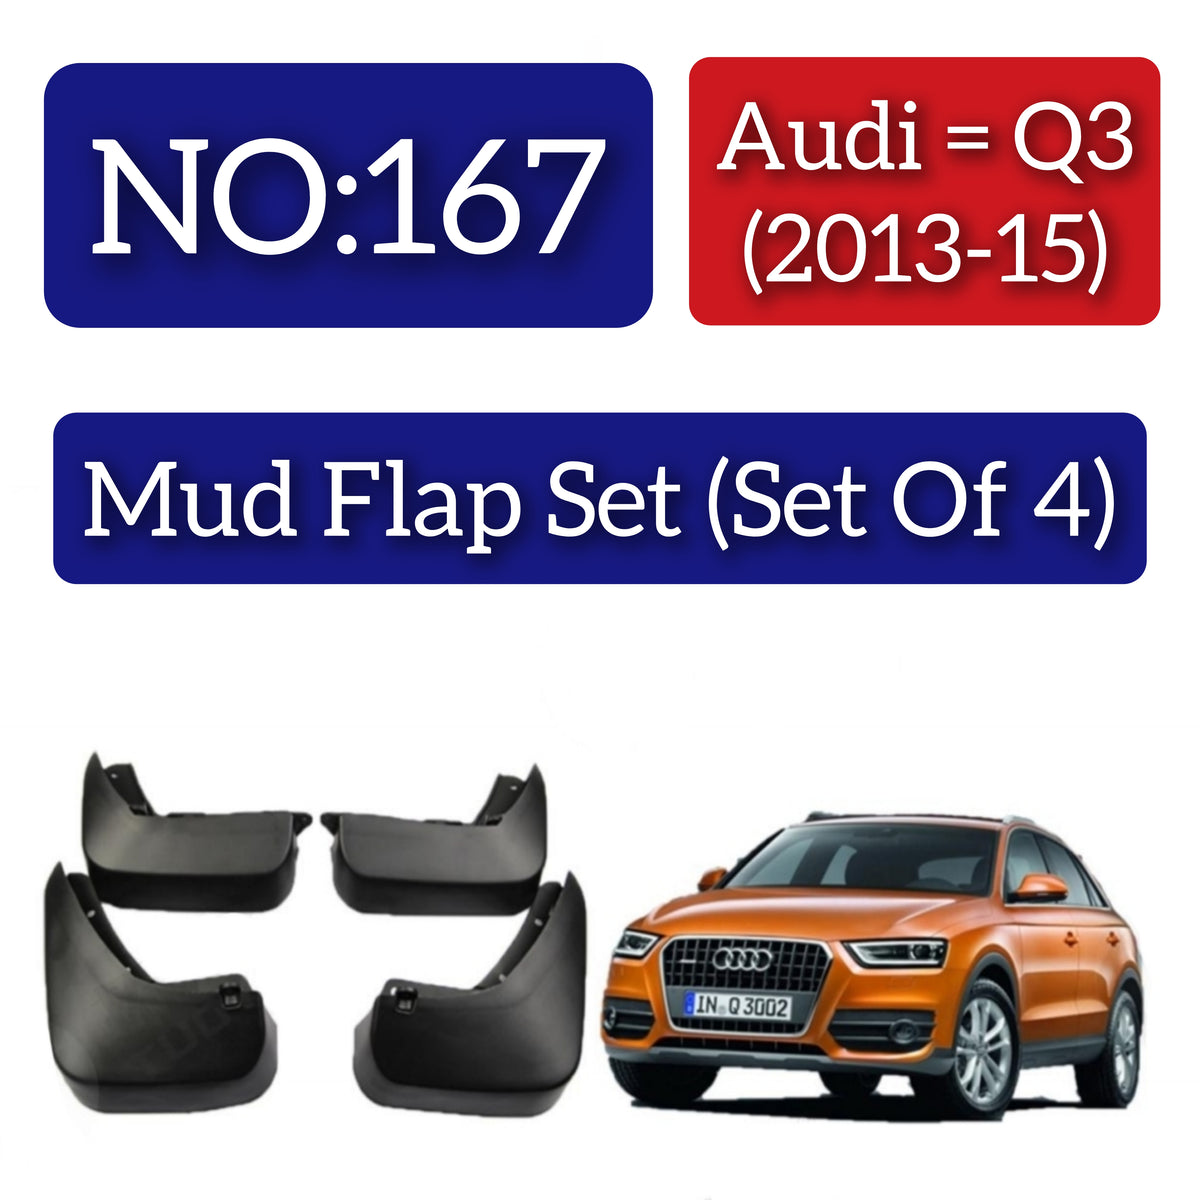 Audi Q3 (2013-15) Mud Flap Set (Set of 4) Tag 167